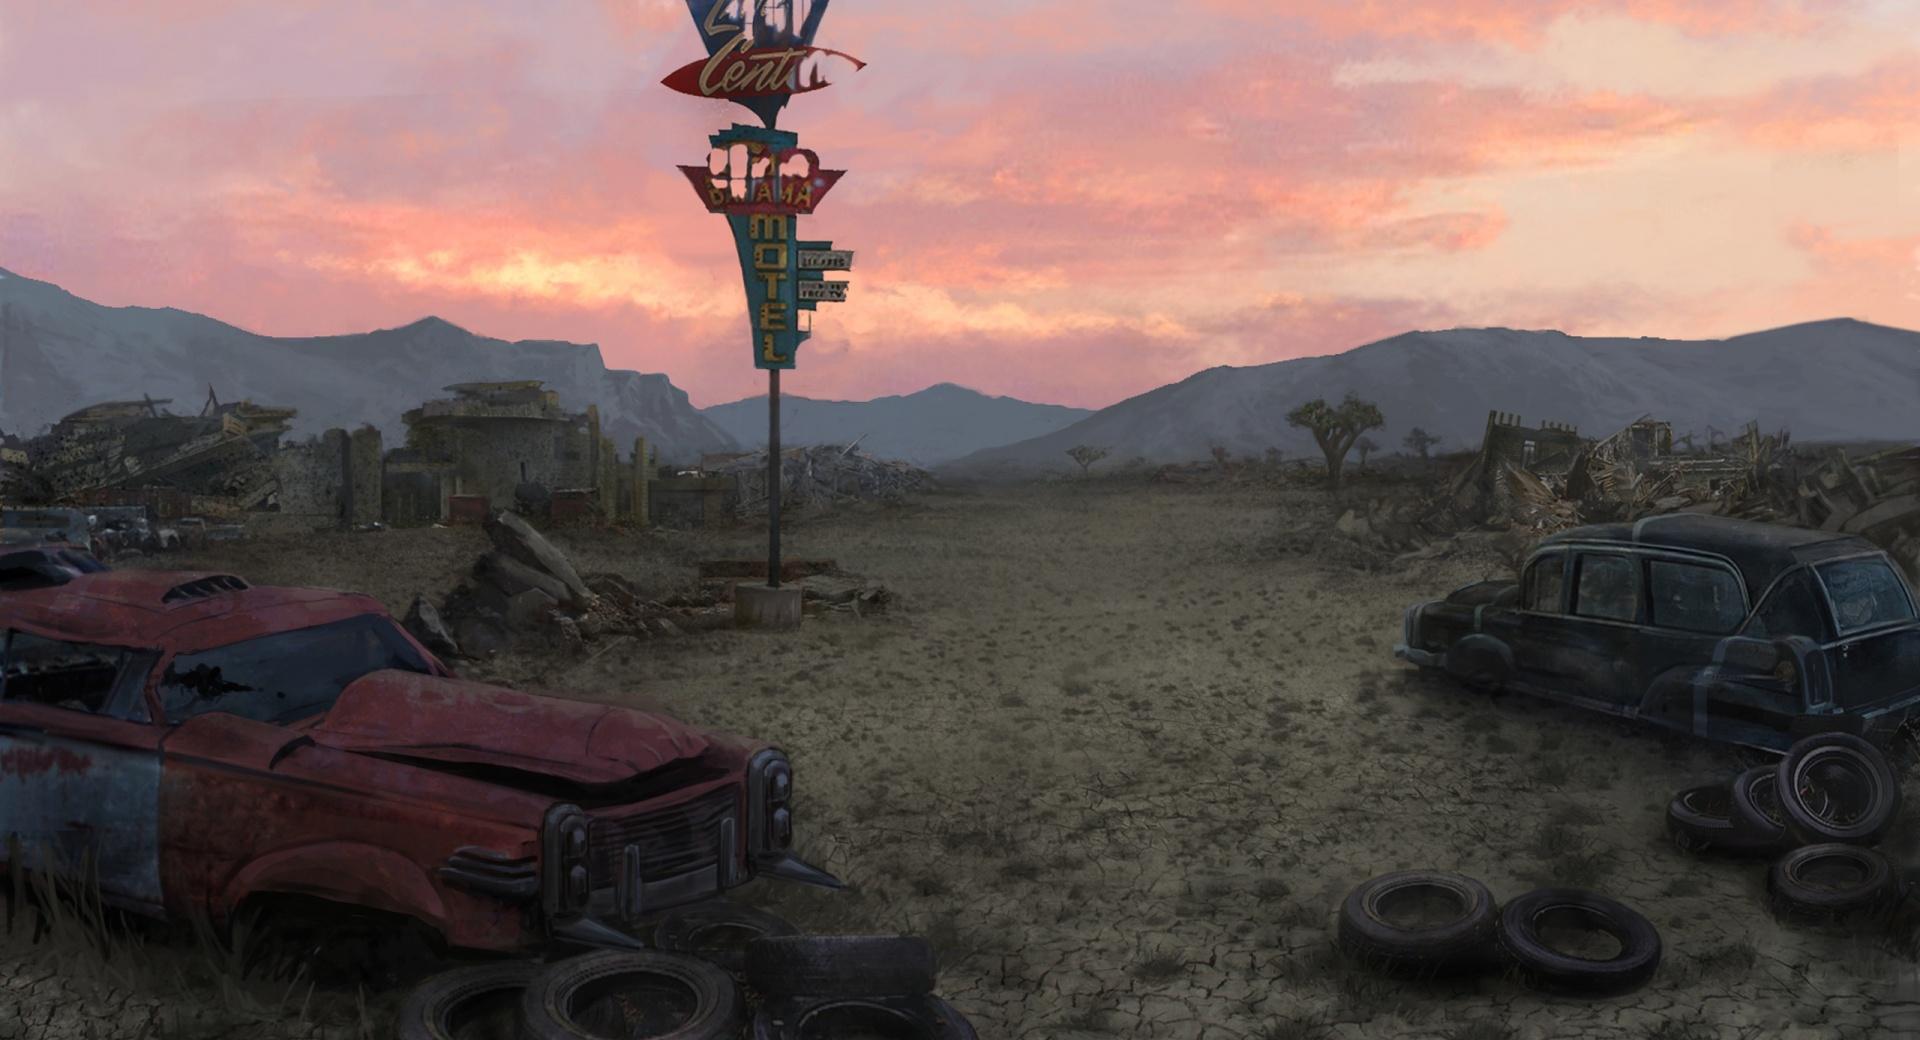 Fallout New Vegas Concept Art - Junkyard at 1024 x 768 size wallpapers HD quality